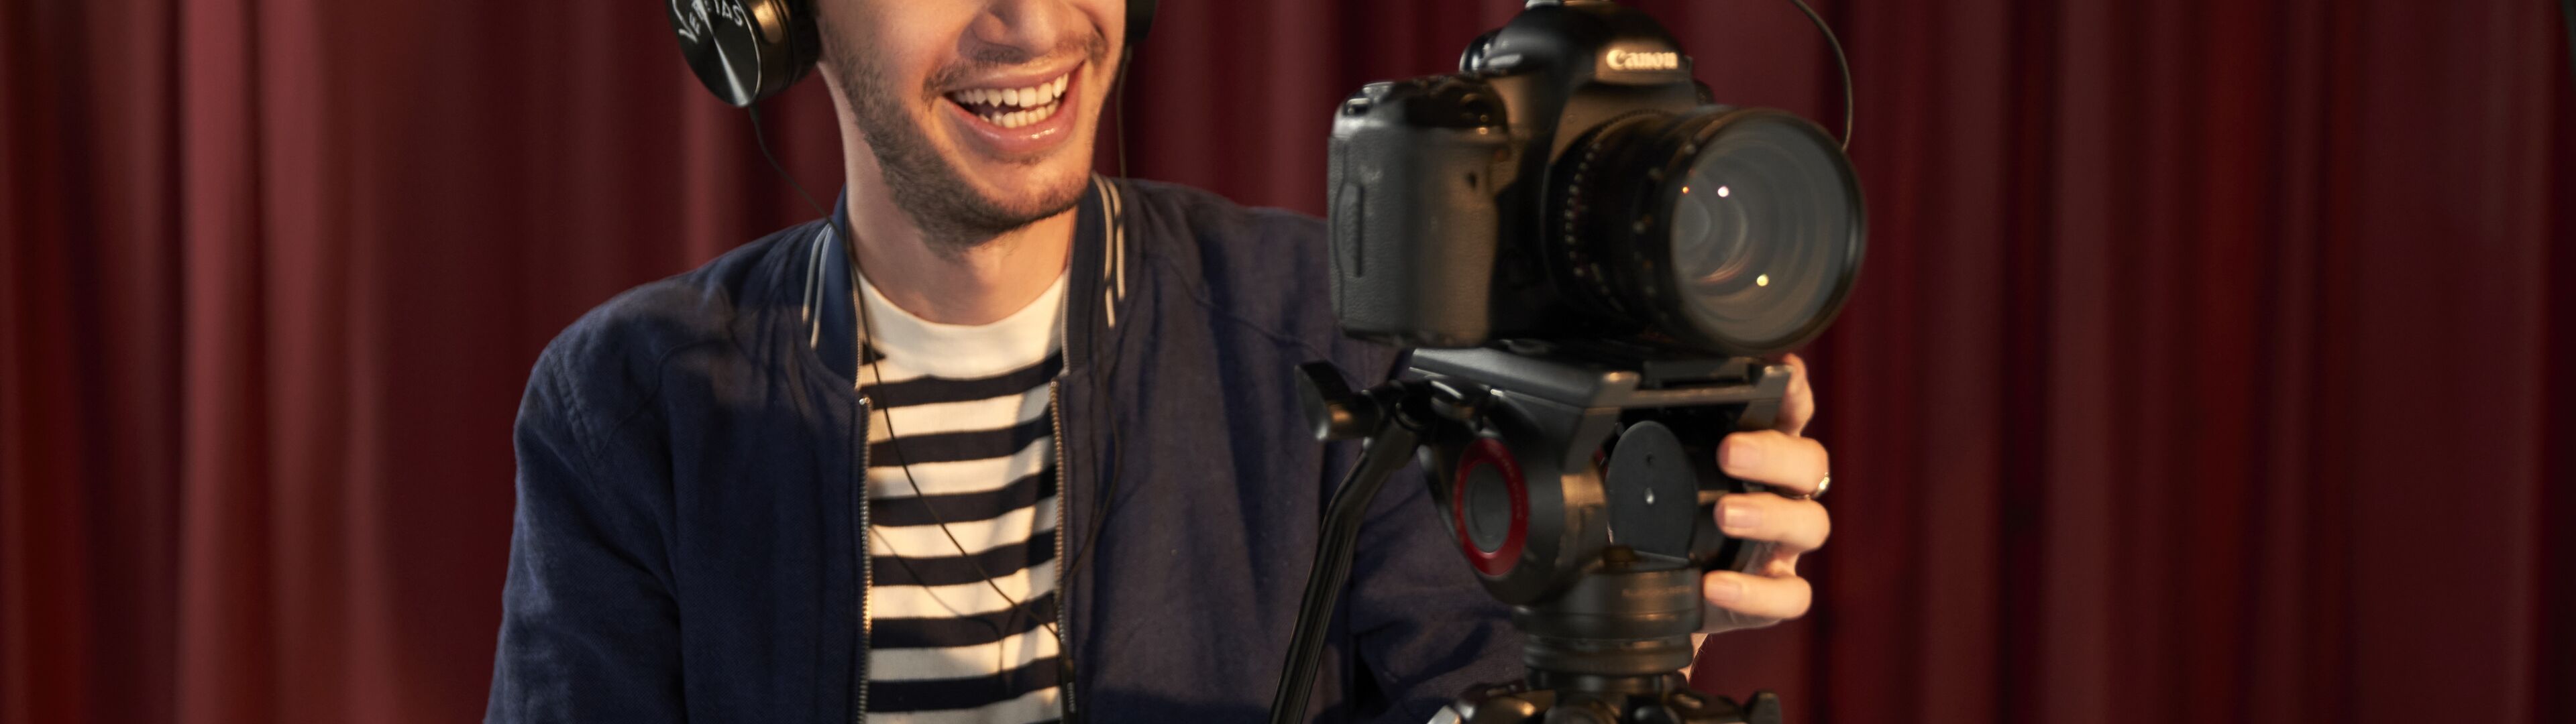 Un hombre sonriente maneja una cámara de vídeo profesional en un trípode, con auriculares, frente a un telón rojo.